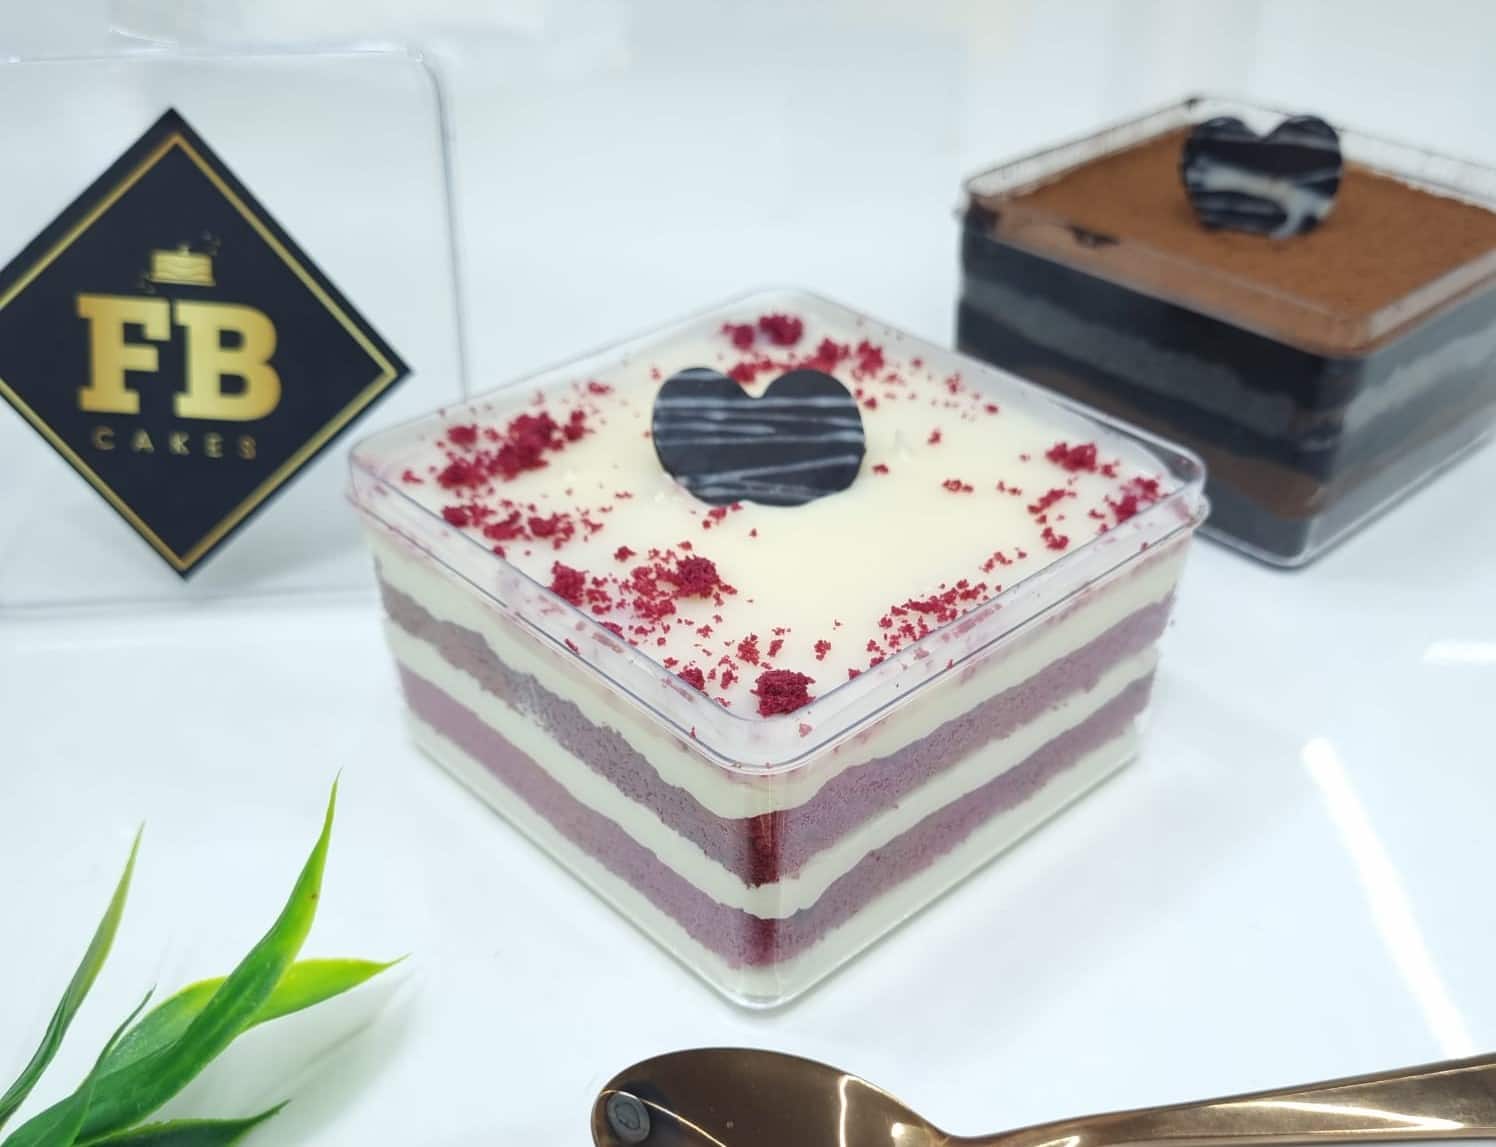 FB Cakes in Adambakkam,Chennai - Order Food Online - Best Cake Shops in  Chennai - Justdial